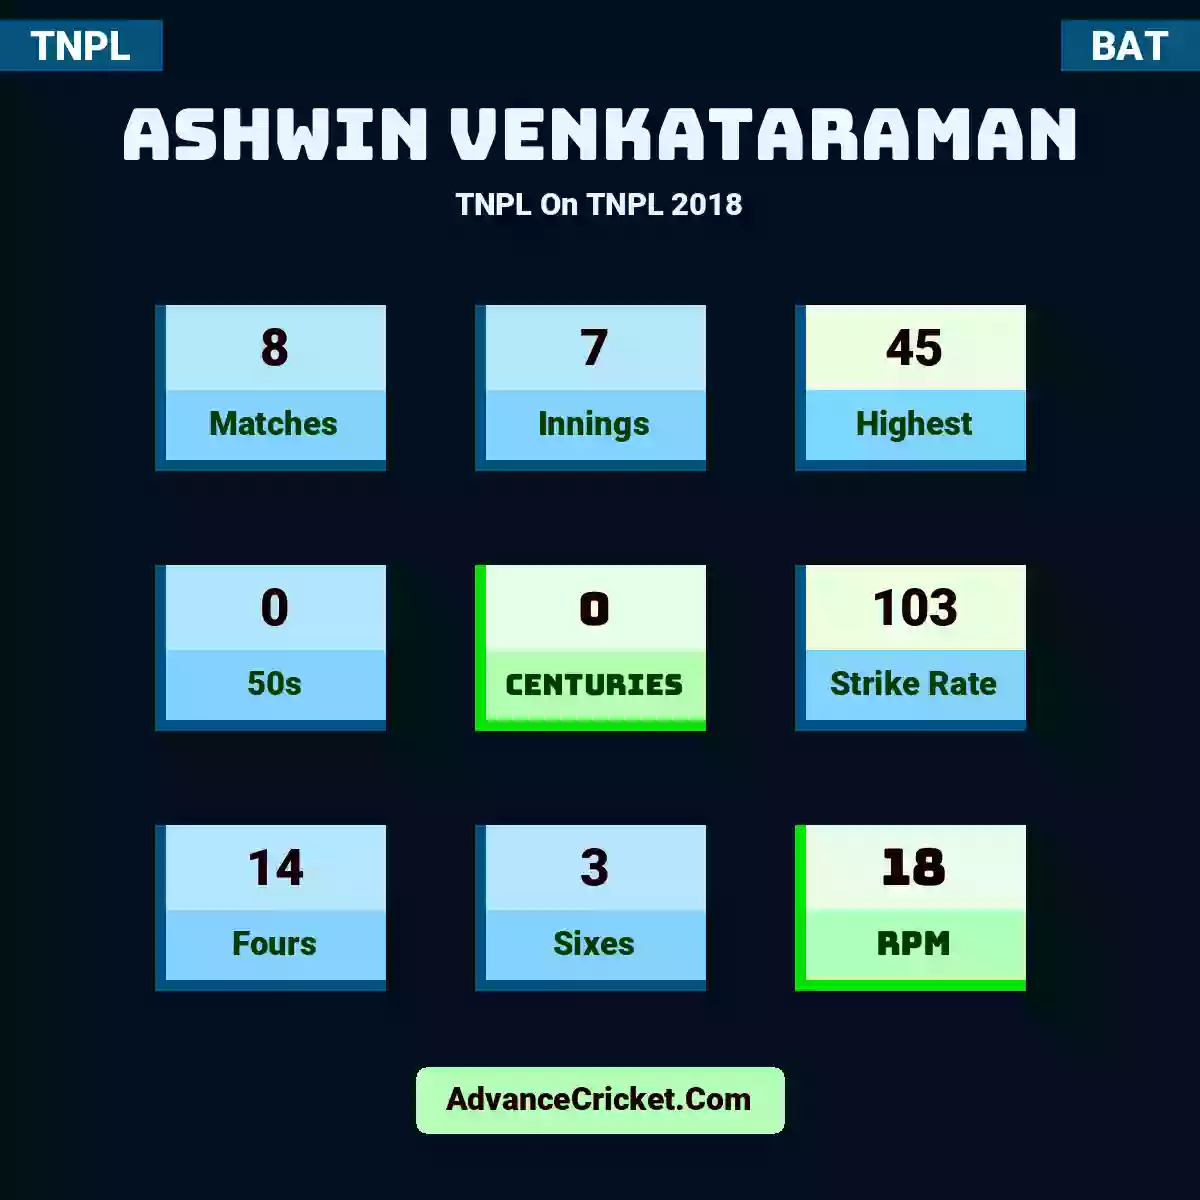 Ashwin Venkataraman TNPL  On TNPL 2018, Ashwin Venkataraman played 8 matches, scored 45 runs as highest, 0 half-centuries, and 0 centuries, with a strike rate of 103. A.Venkataraman hit 14 fours and 3 sixes, with an RPM of 18.